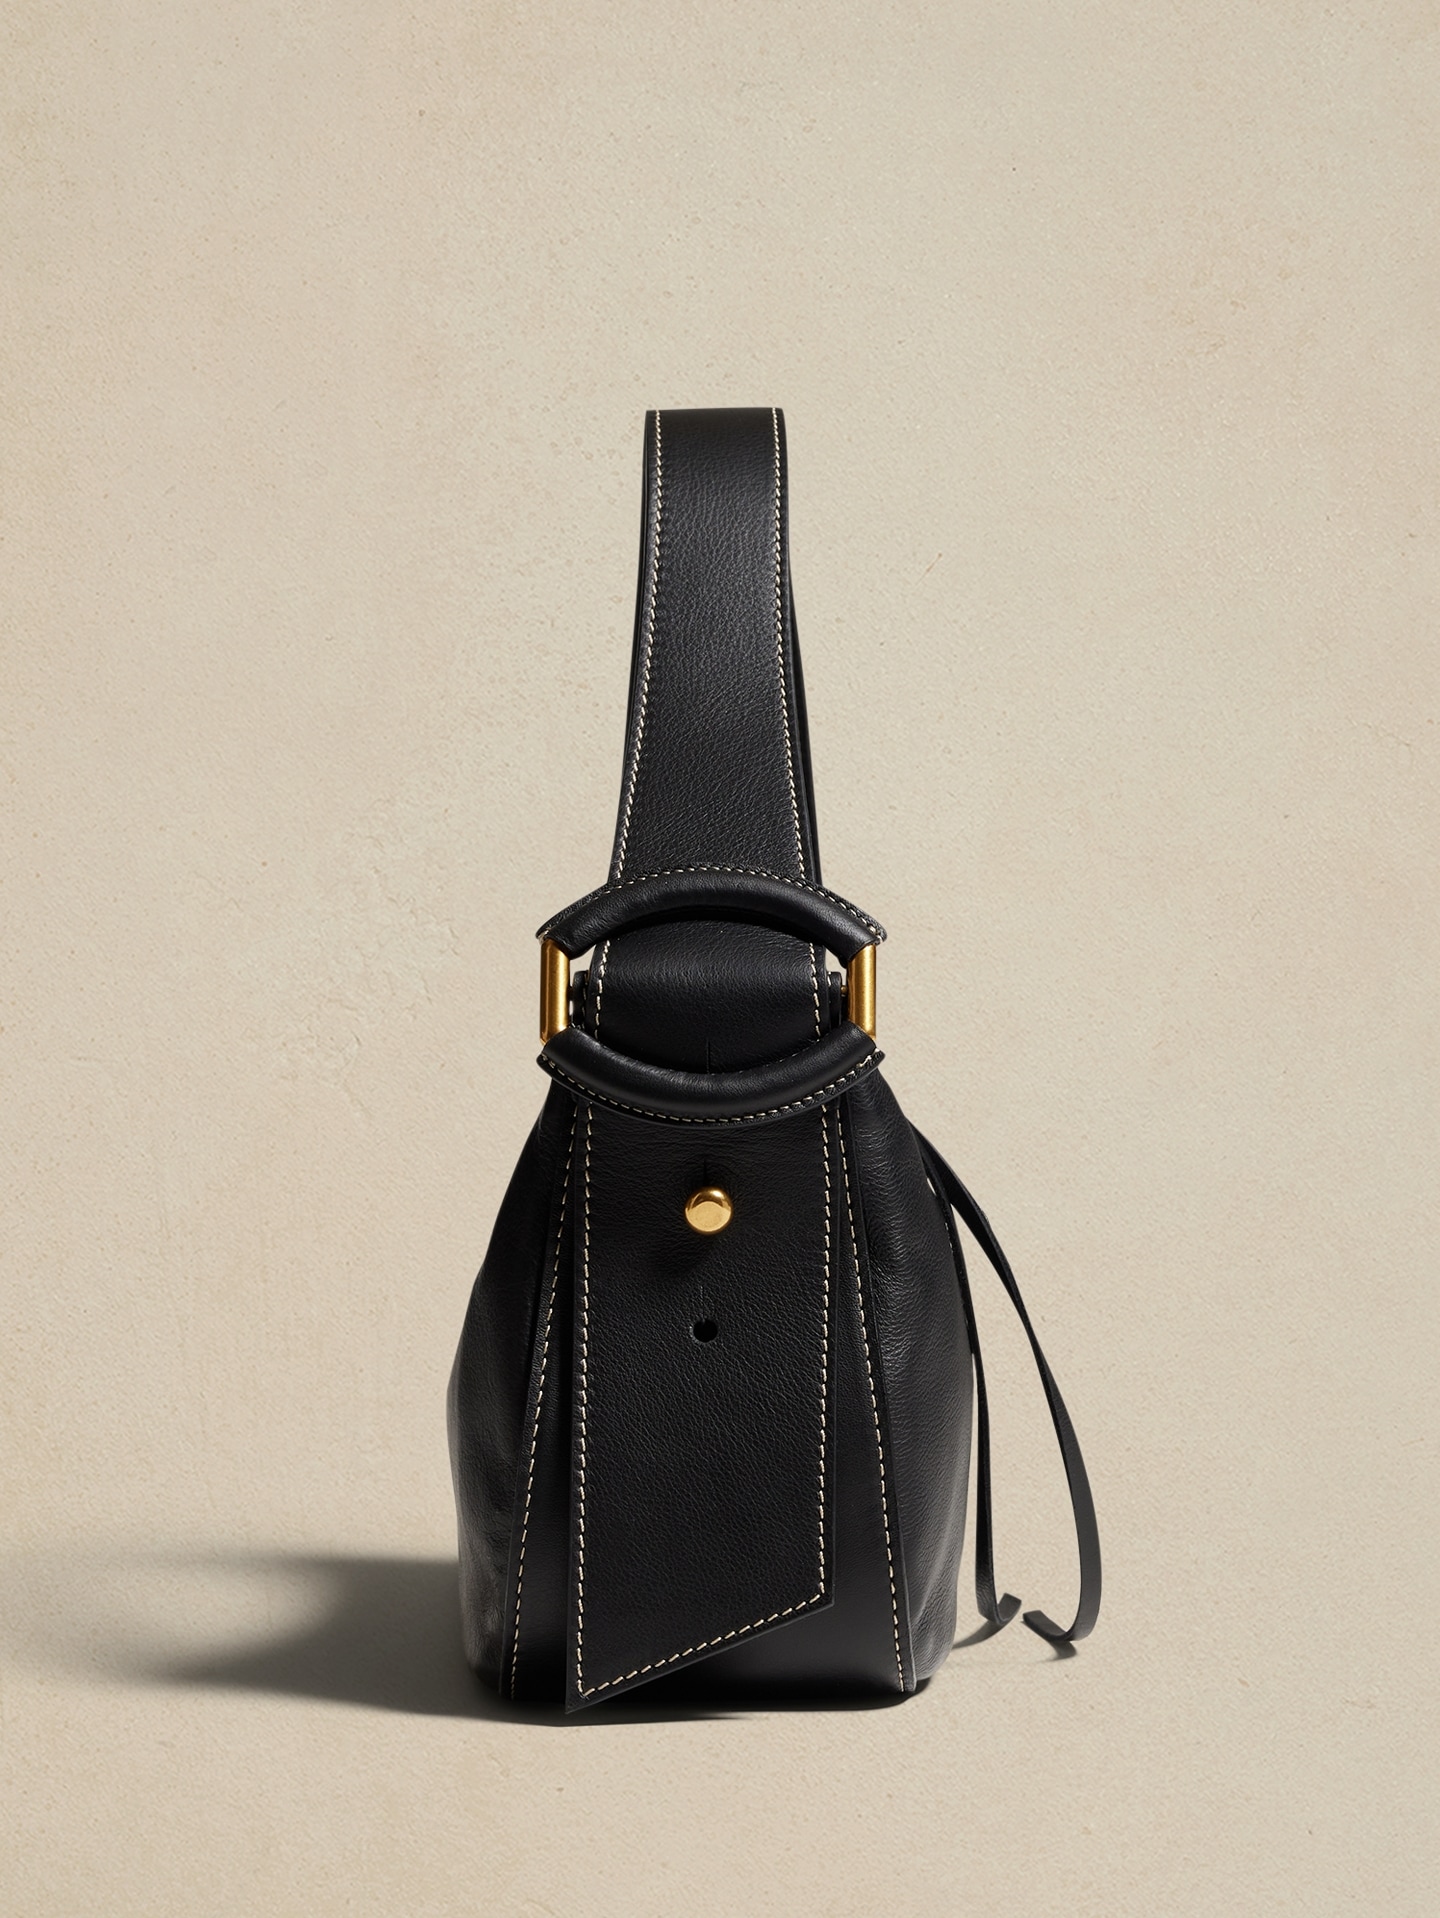 GBG Los Angeles Crossbody Bag Black Leather Spell Out Small Handbag Purse |  Black cross body bag, Crossbody bag, Leather